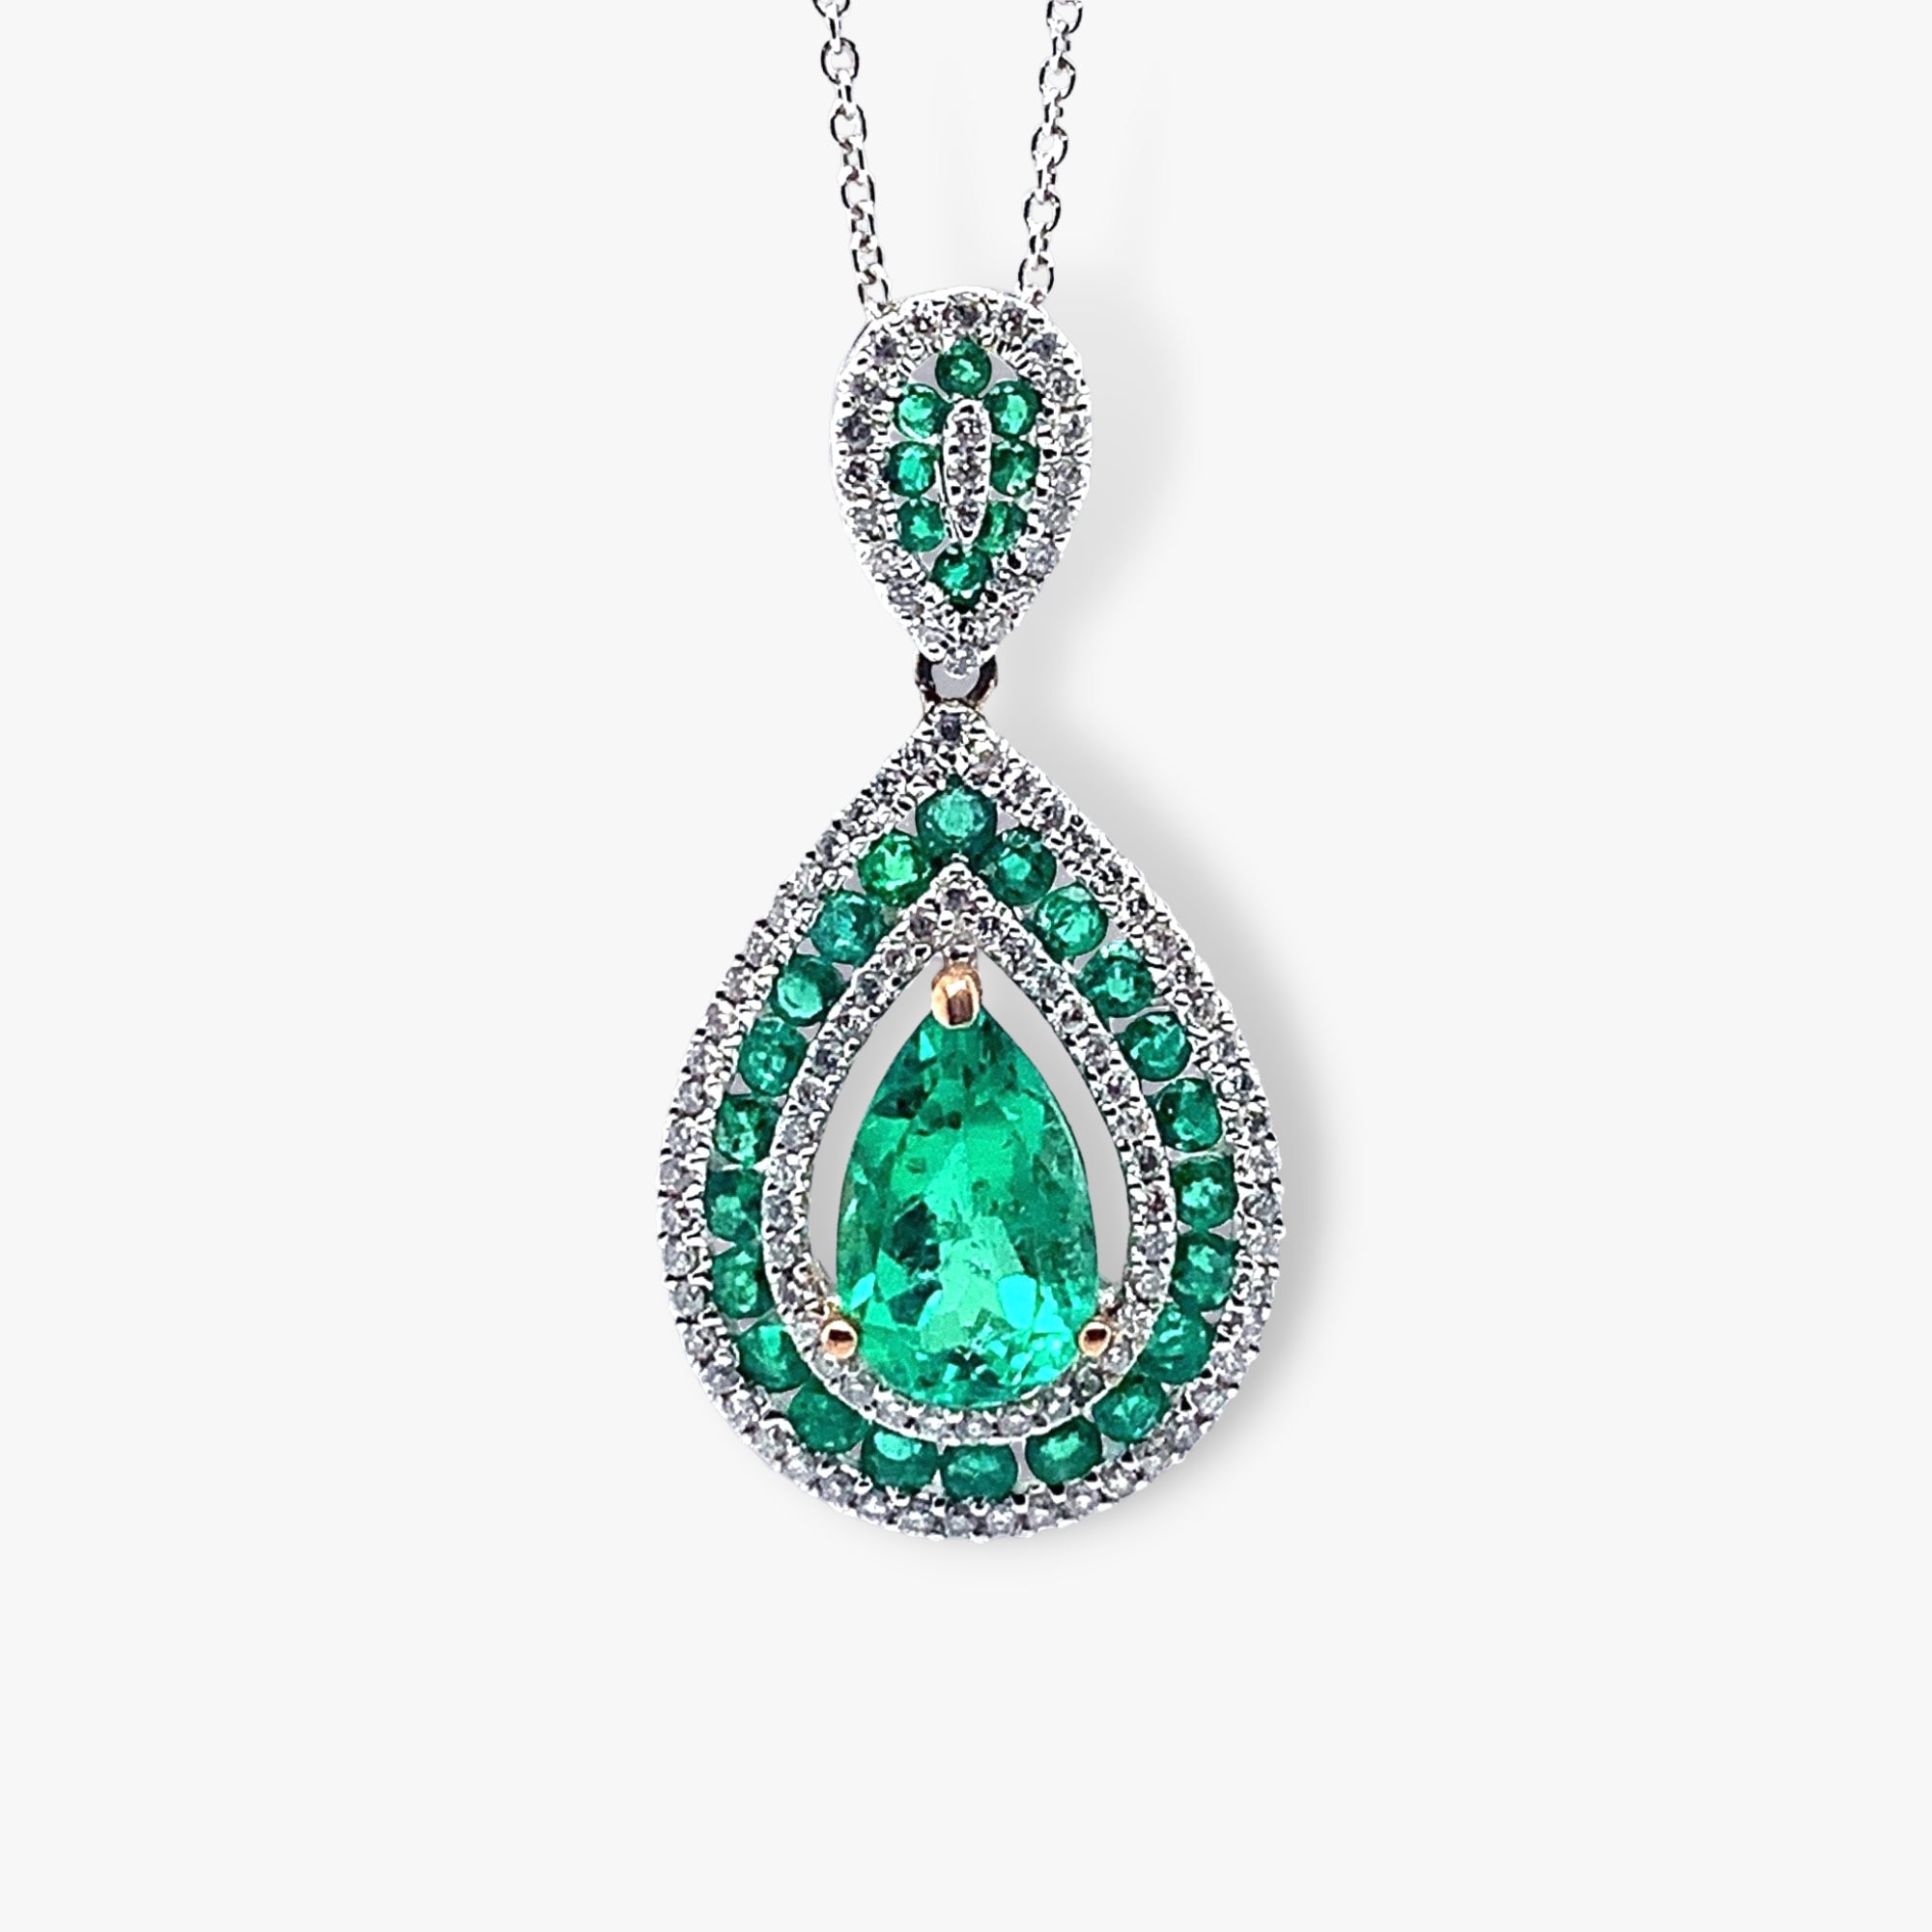 18k White Gold Pear-Shaped Emerald and Diamond Pendant